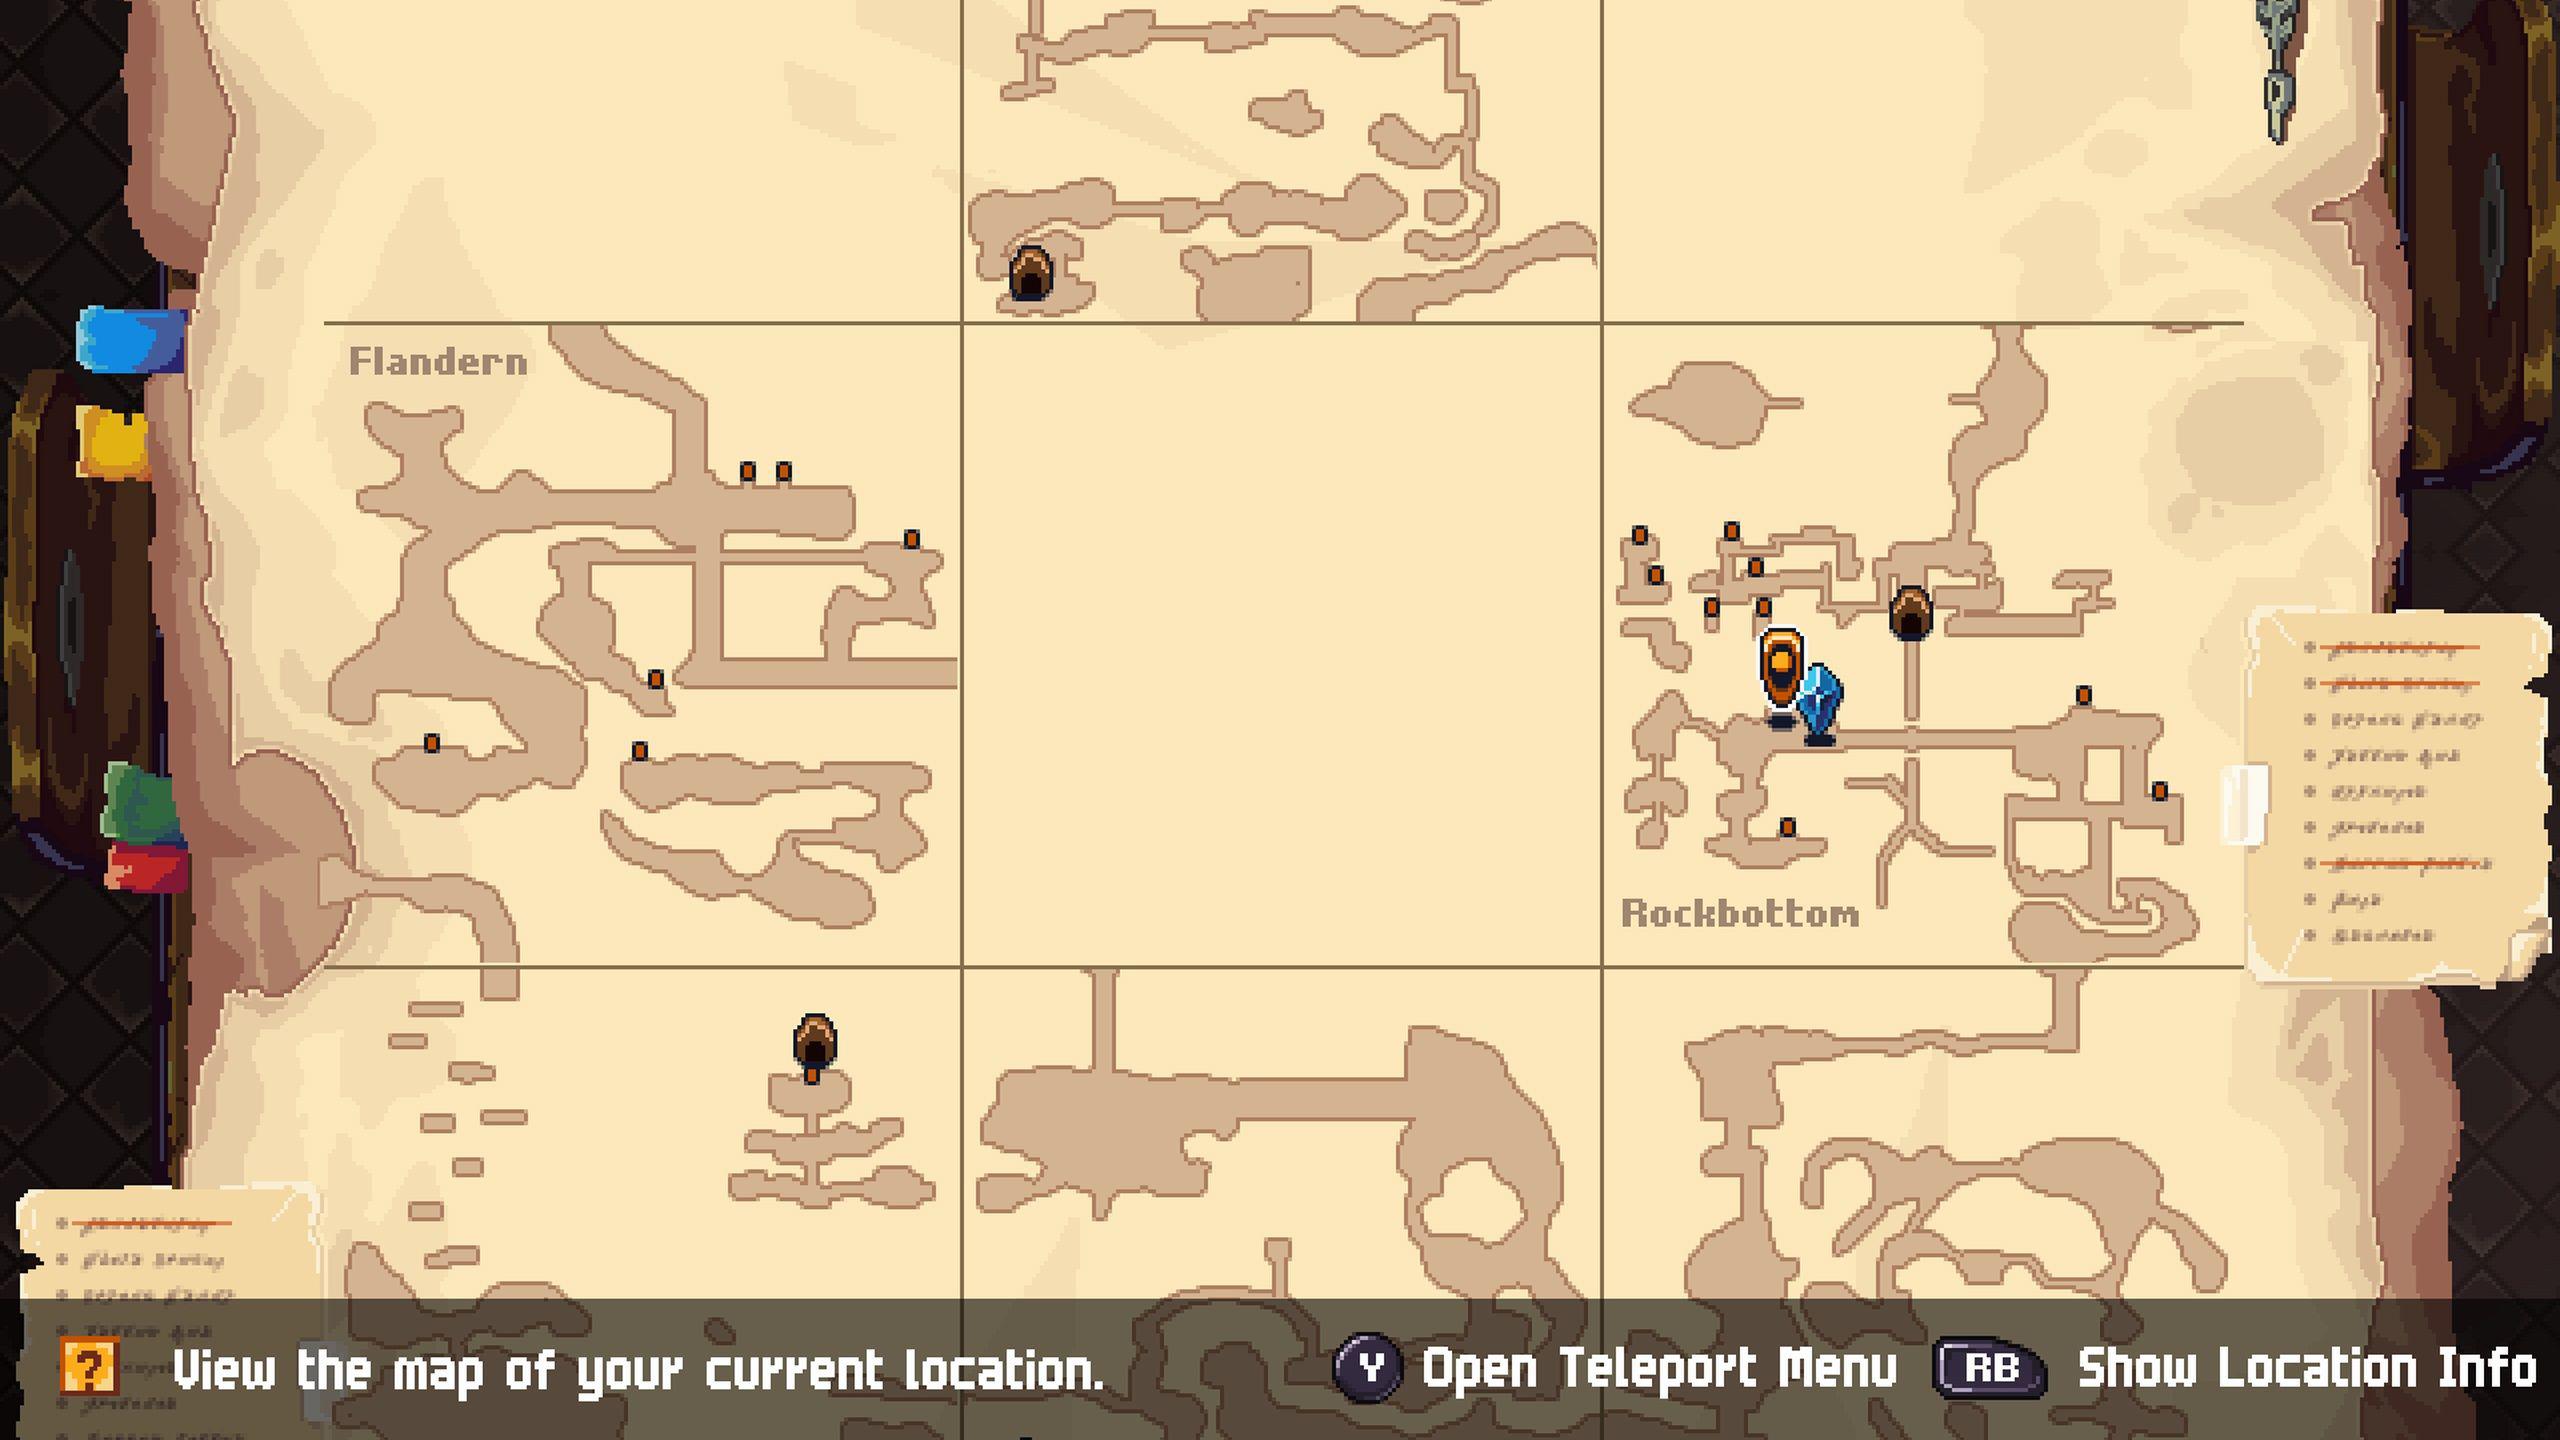 Chained Echoes: Crossing Mountains Quest tem um truque que pode confundir os jogadores